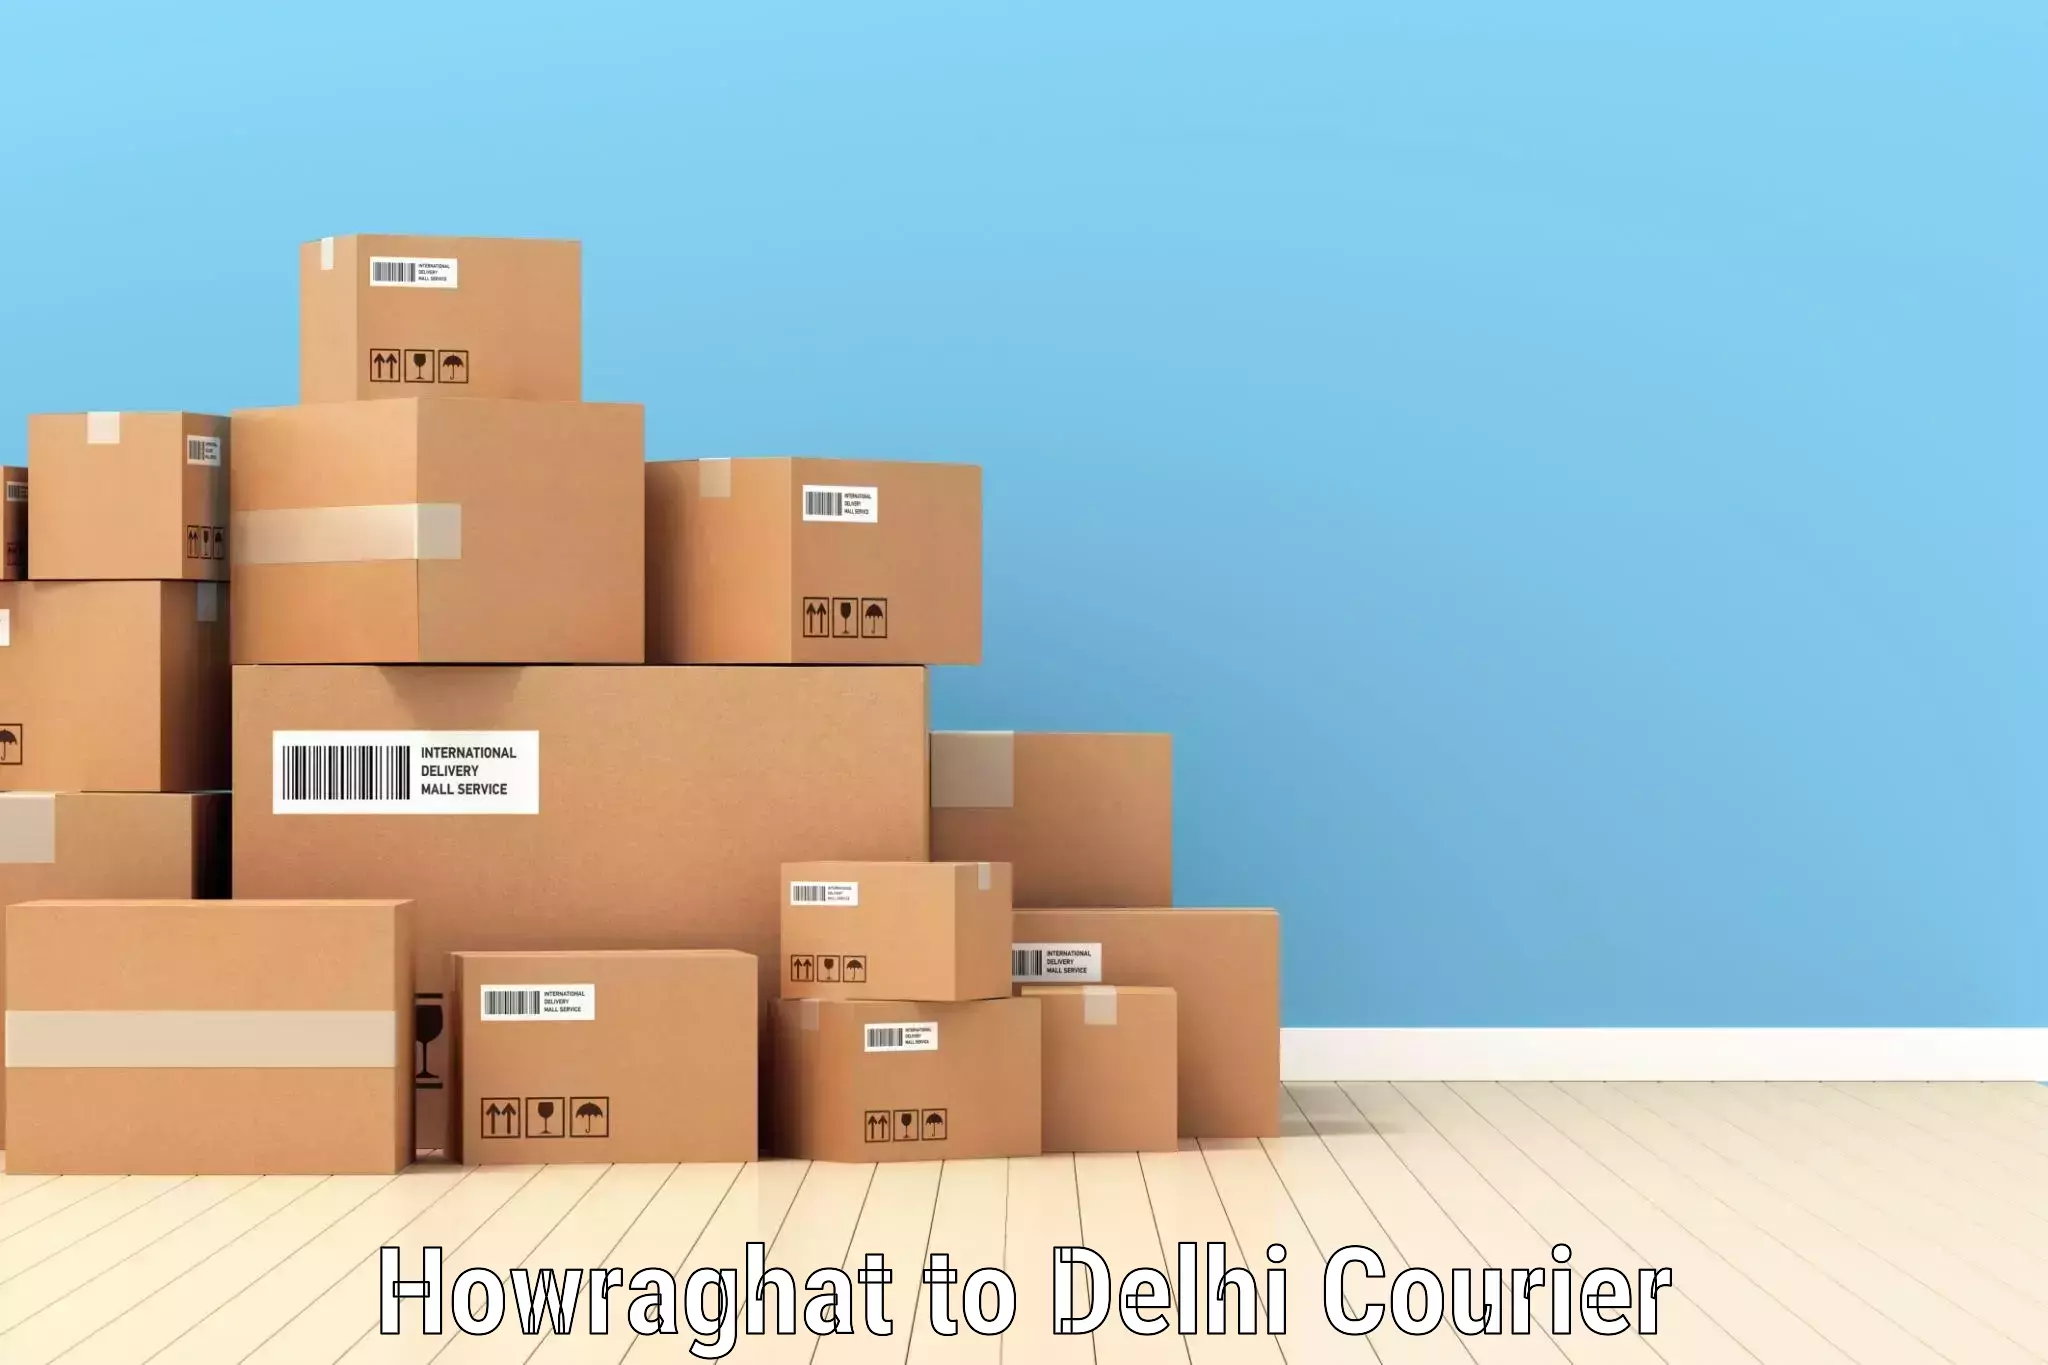 Efficient freight transportation Howraghat to Jawaharlal Nehru University New Delhi